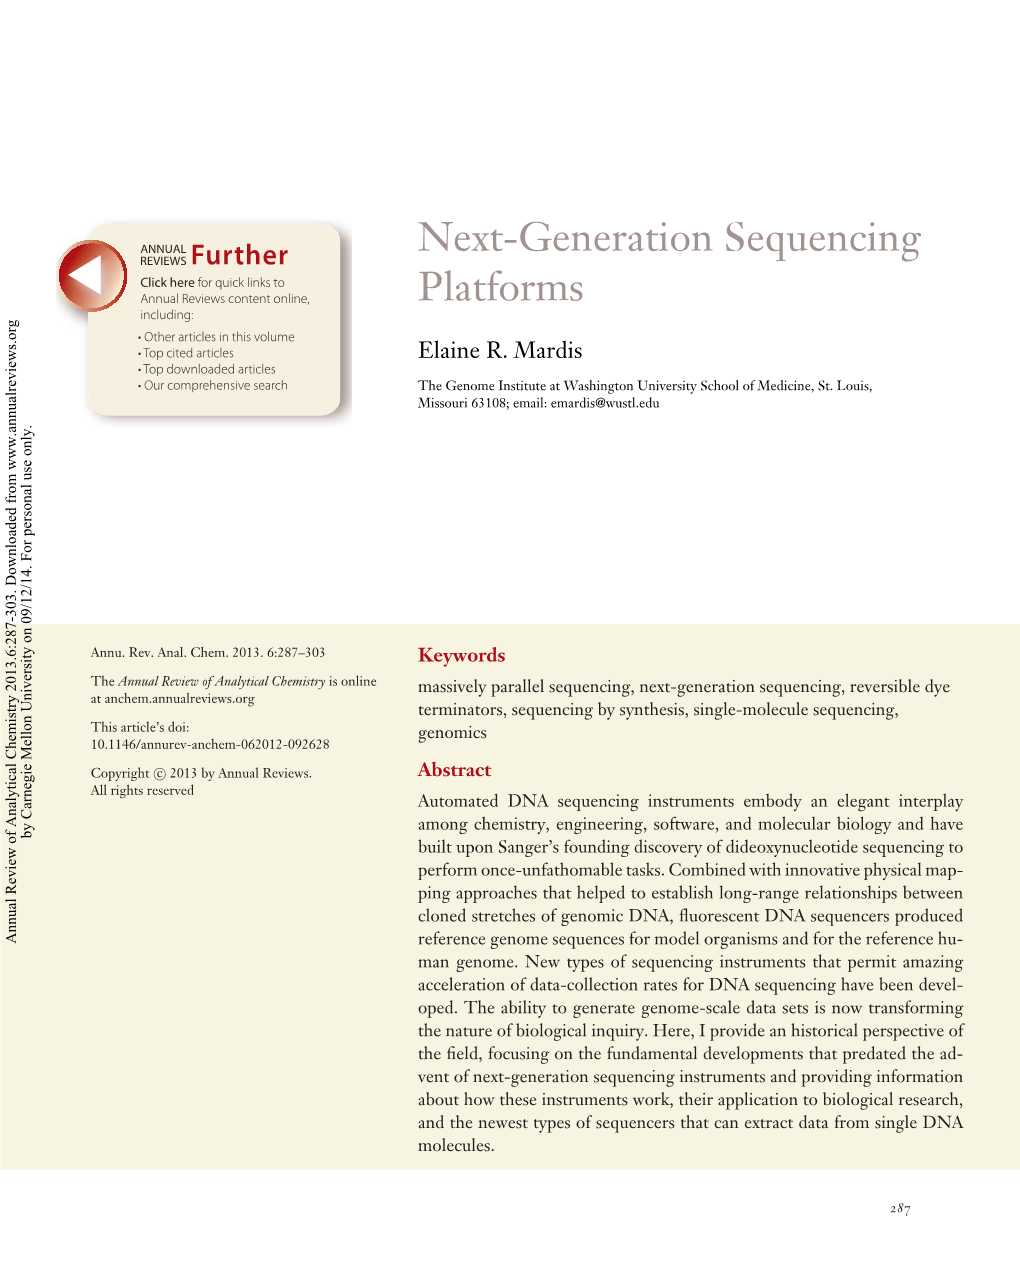 Next-Generation Sequencing Platforms